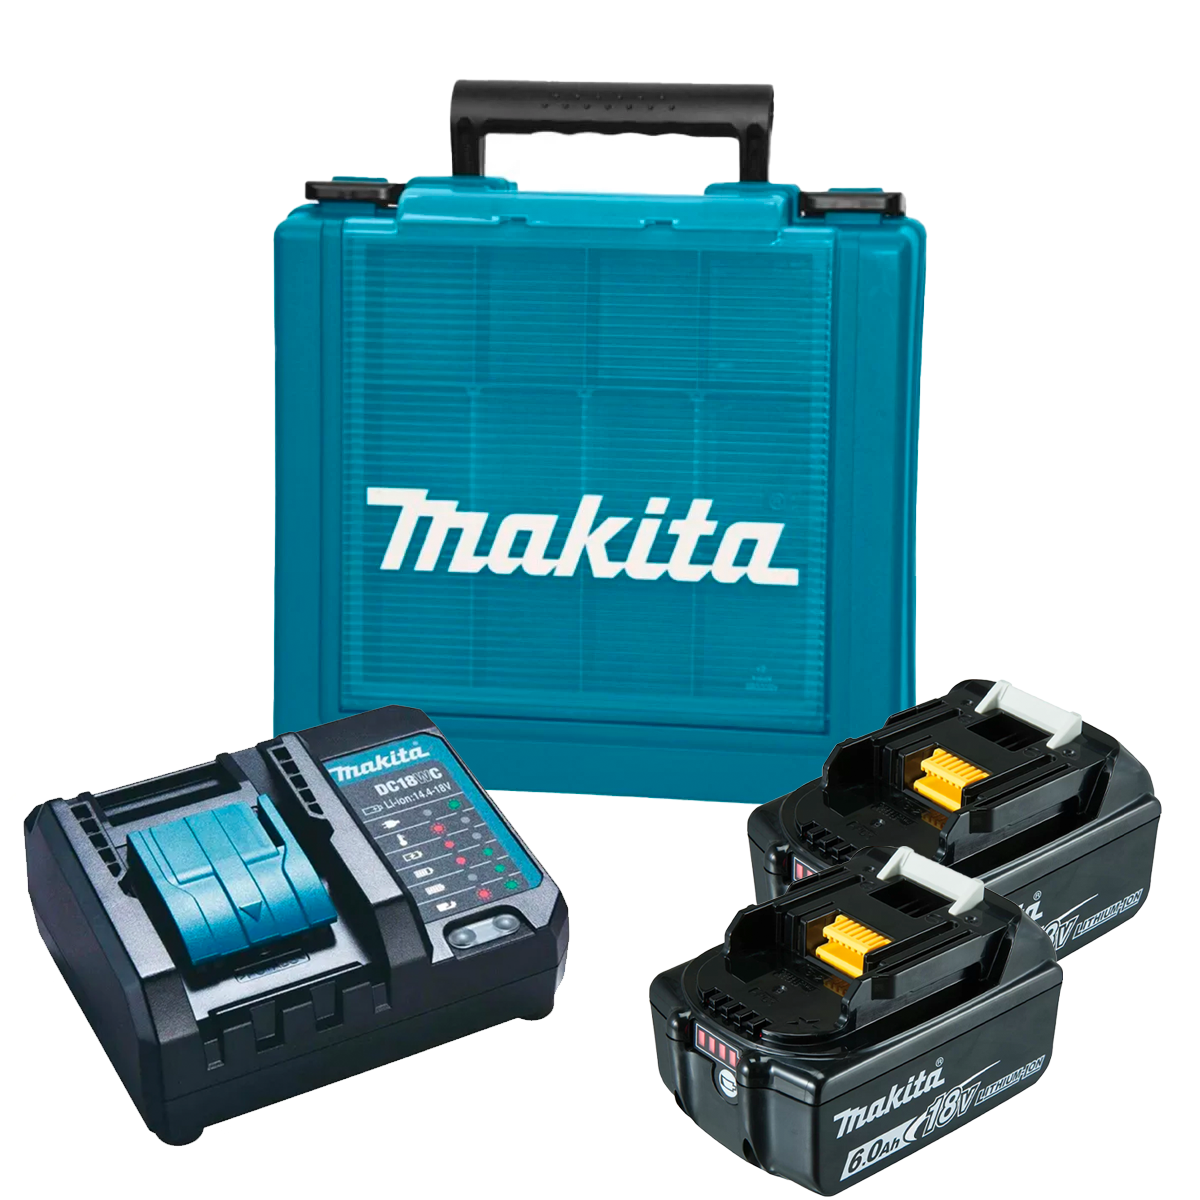 Kit Carregador + 2 Baterias 6 A + Maleta Kitmak1860b Makita